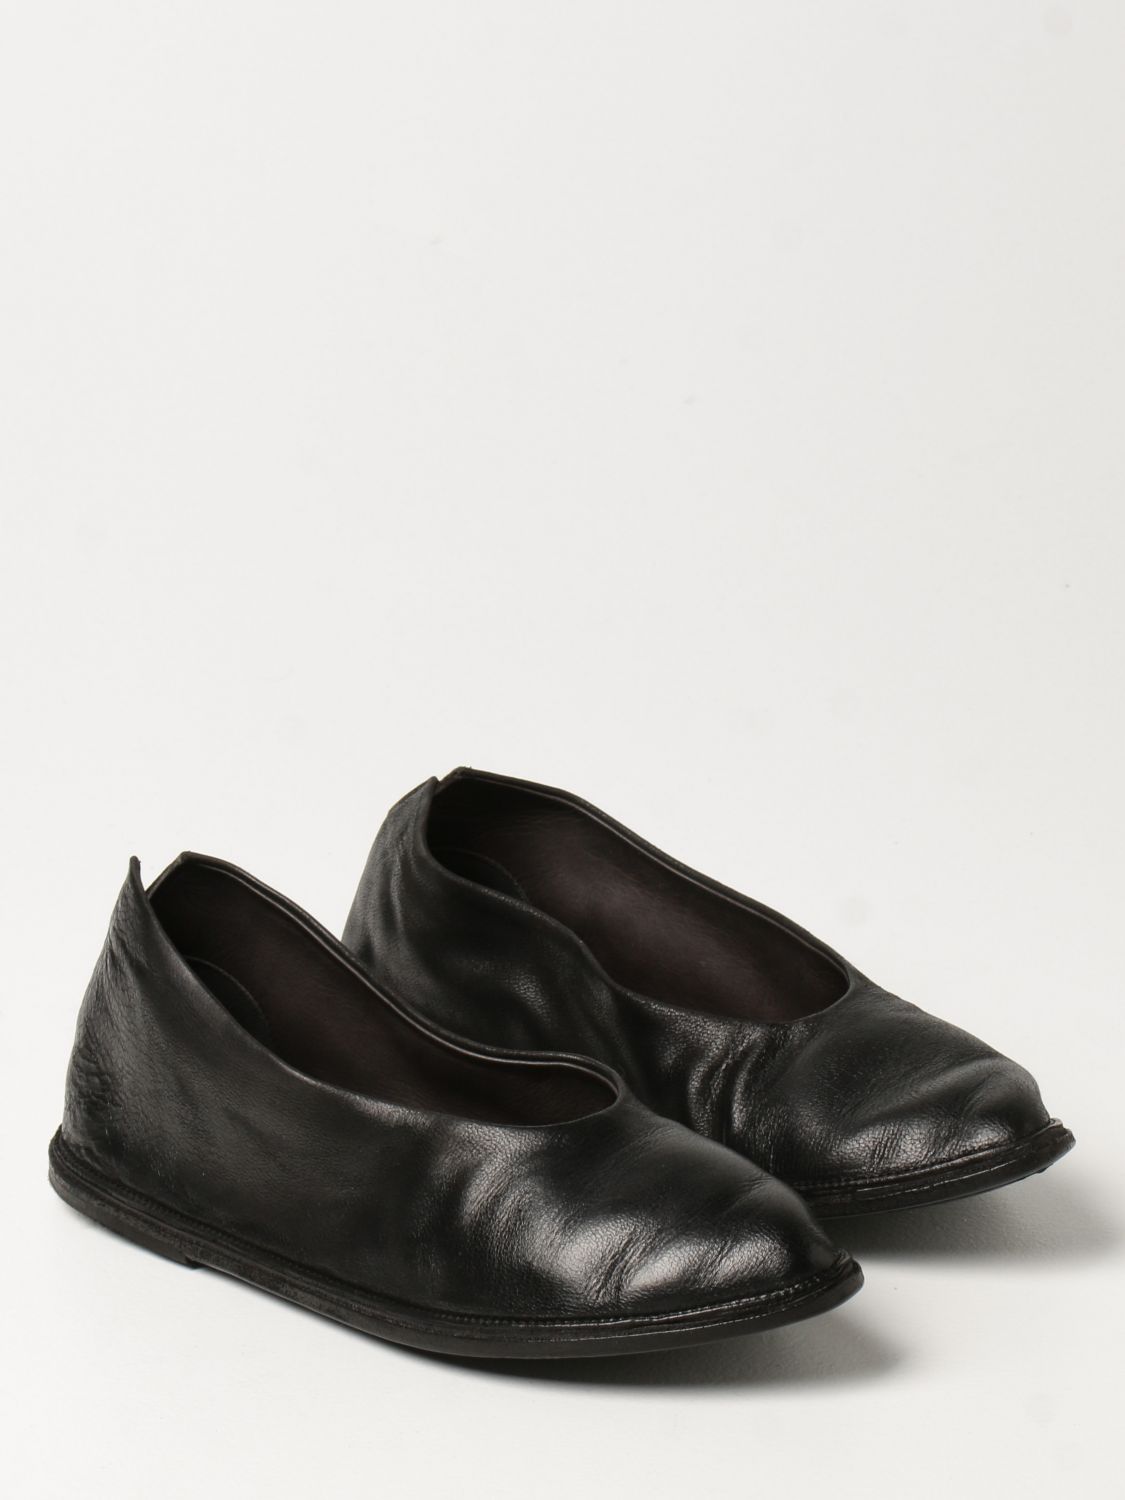 Ballerines Marsèll: Chaussures femme Marsell noir 2